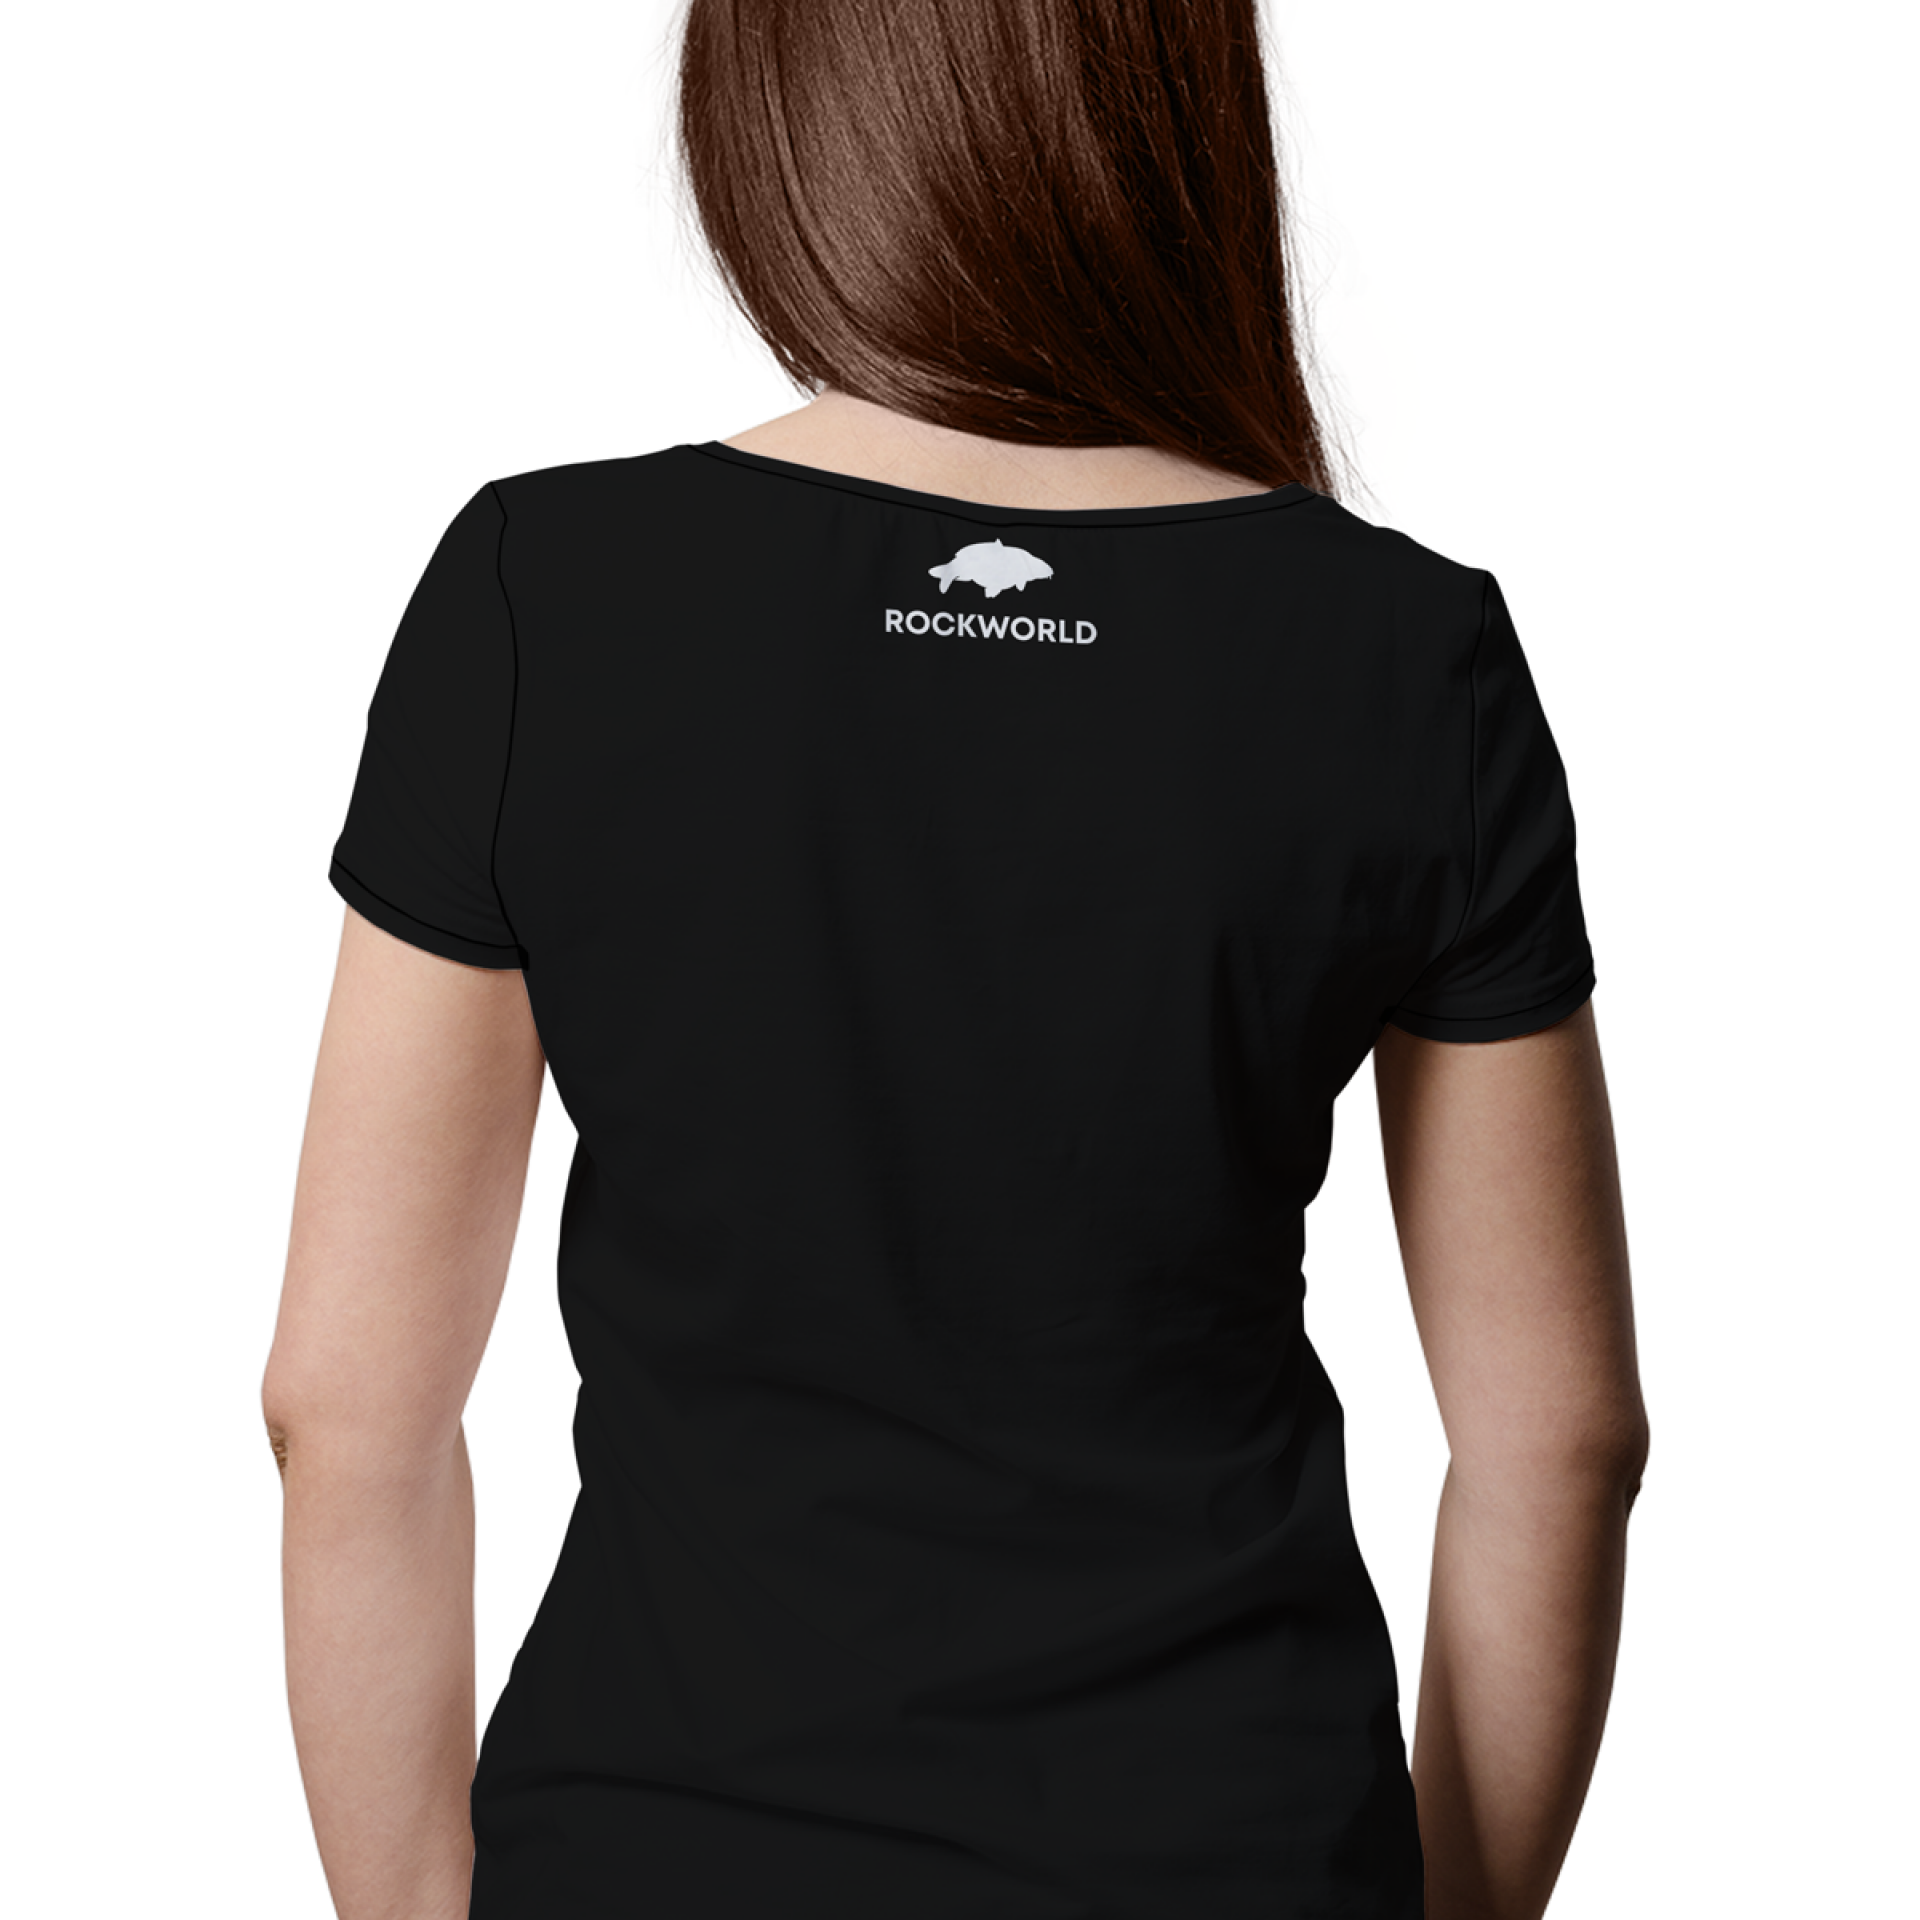 Rockworld Carp Touch - Camiseta de mujer negra